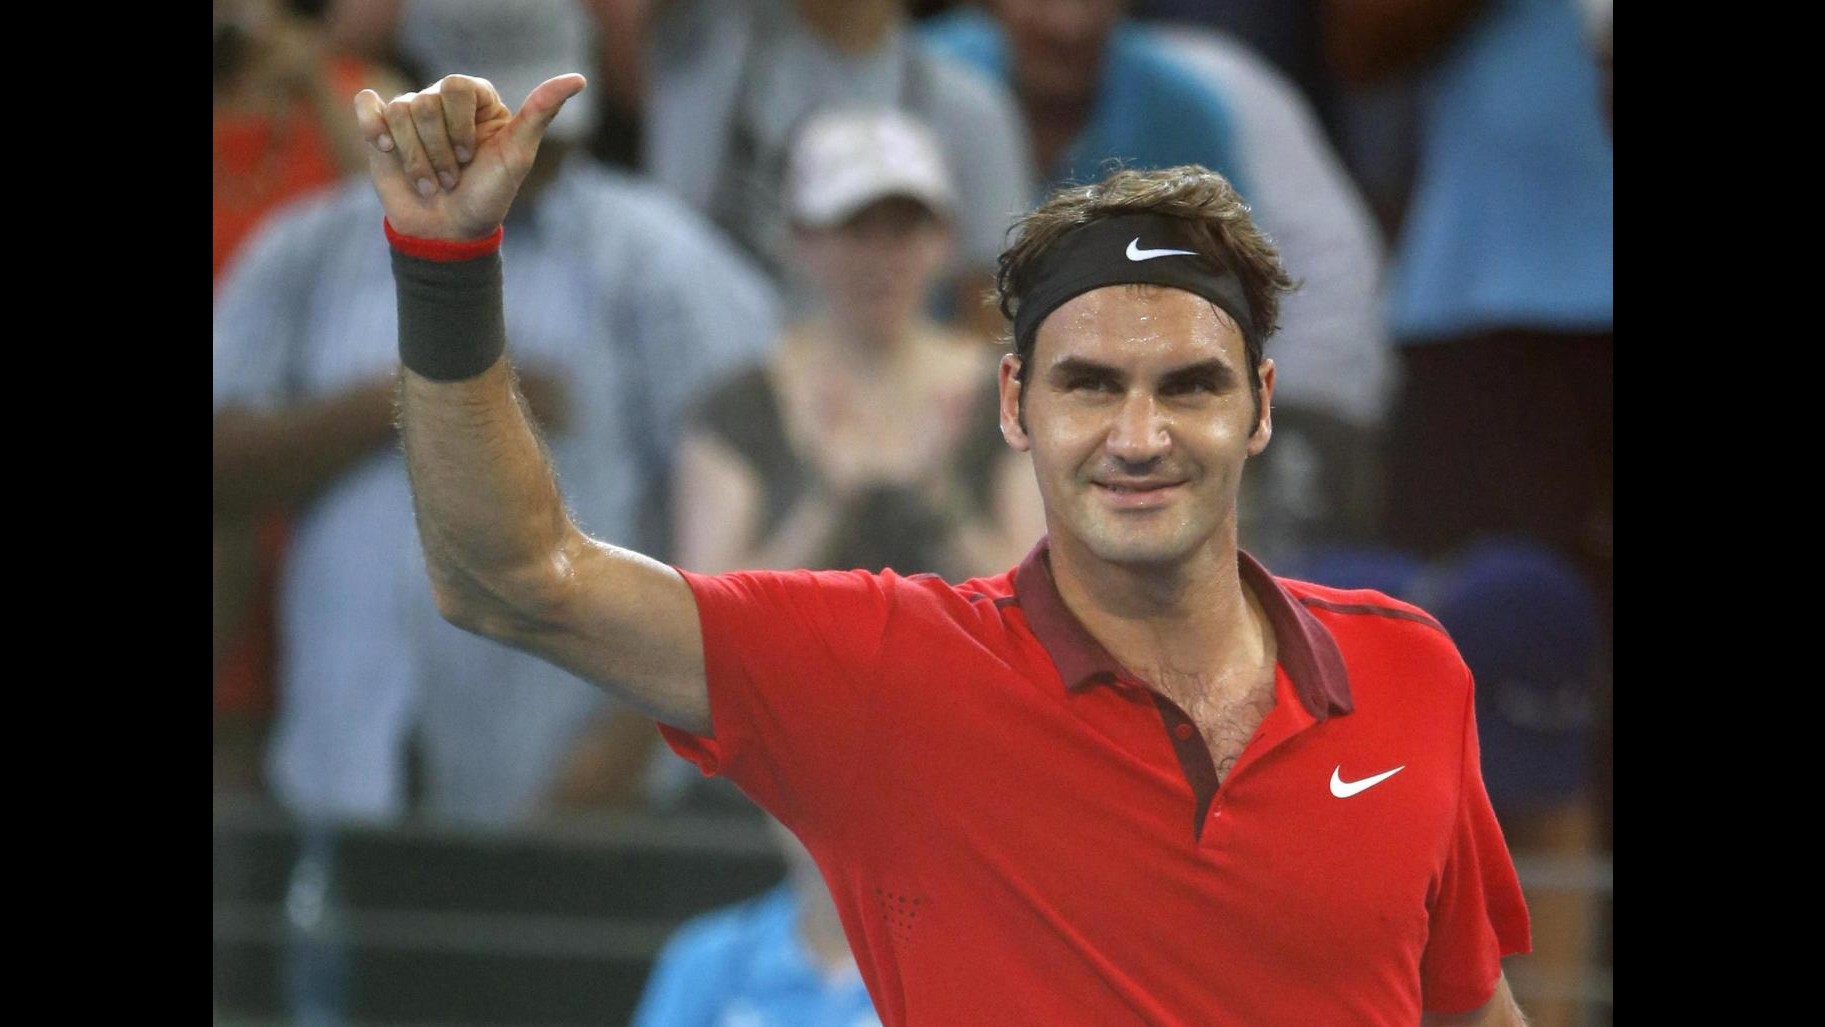 Tennis, Atp Brisbane: Federer sempre più nella leggenda, contro Raonic vittoria n. 1000